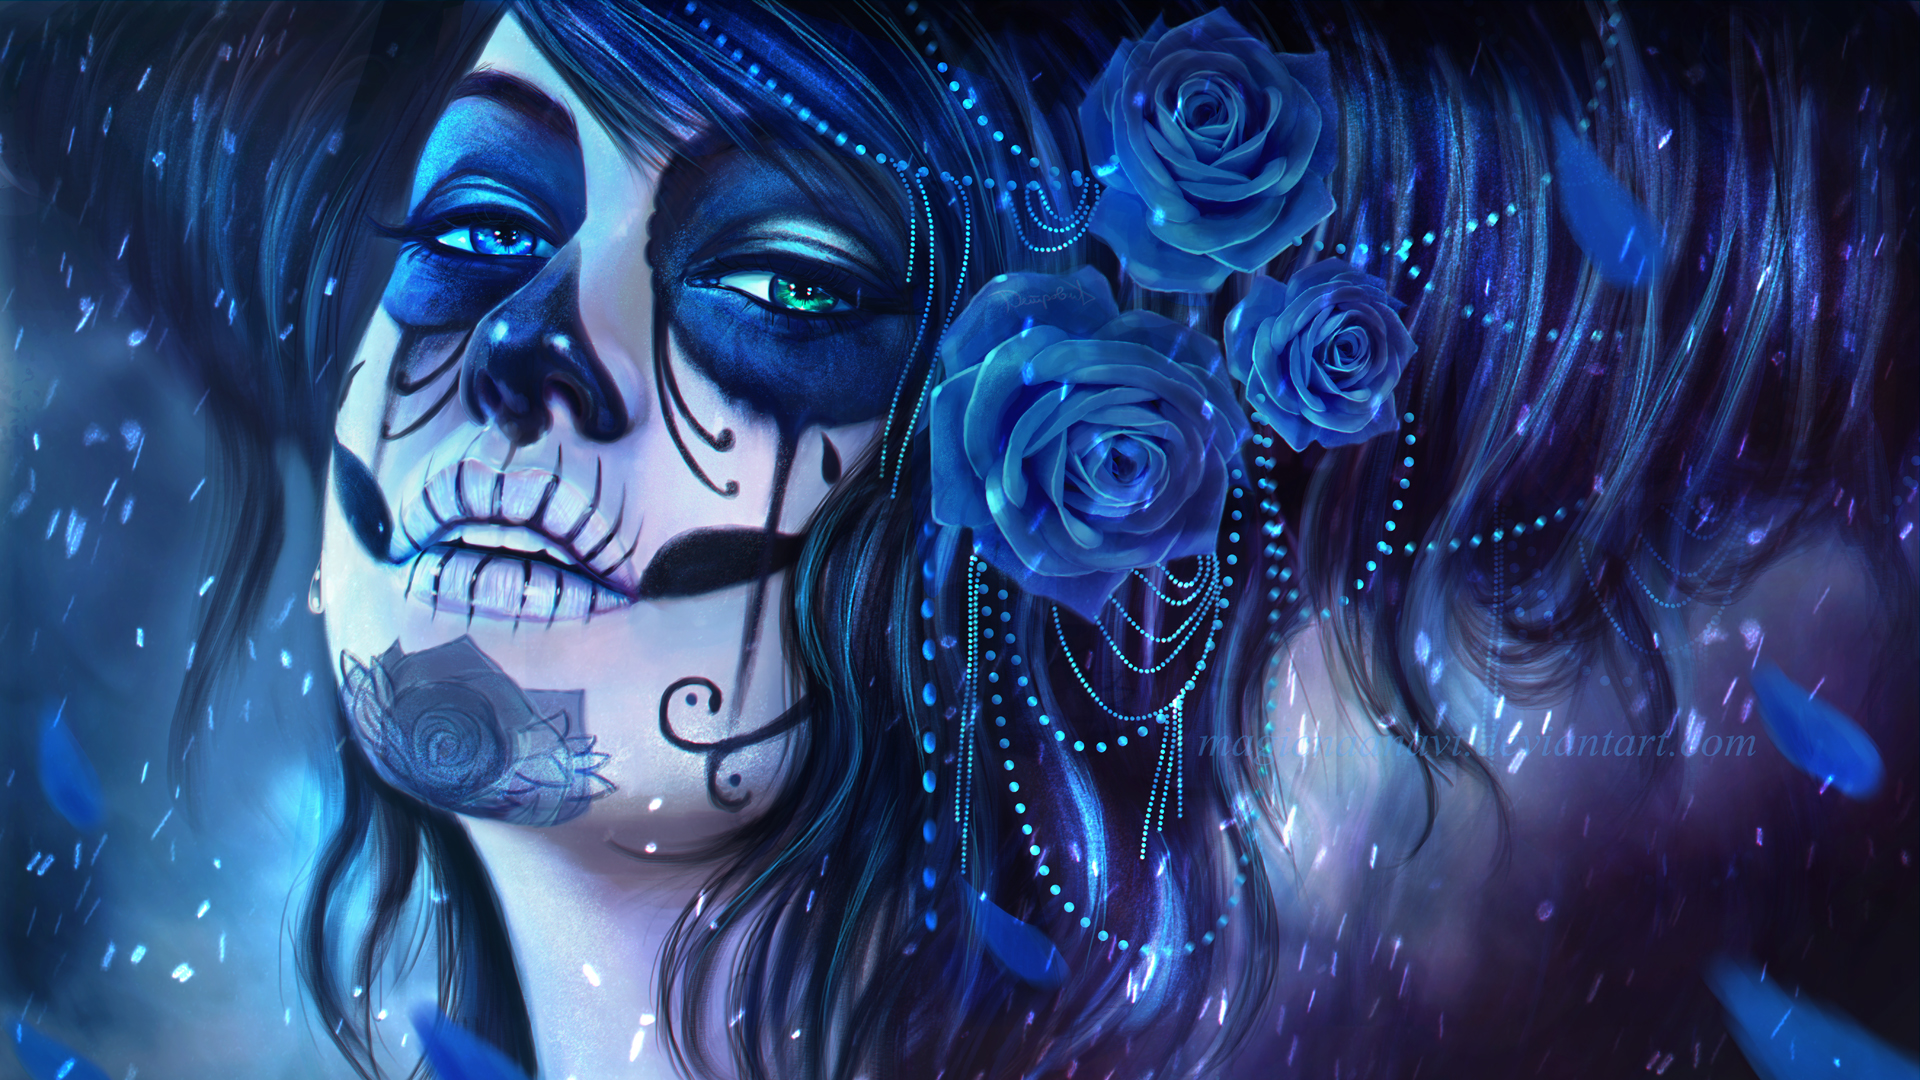 Sugar Skull MagicnaAnavi Rose Artwork Blue Flowers Dia De Los Muertos Skull Face Drawing Fantasy Art 1920x1080